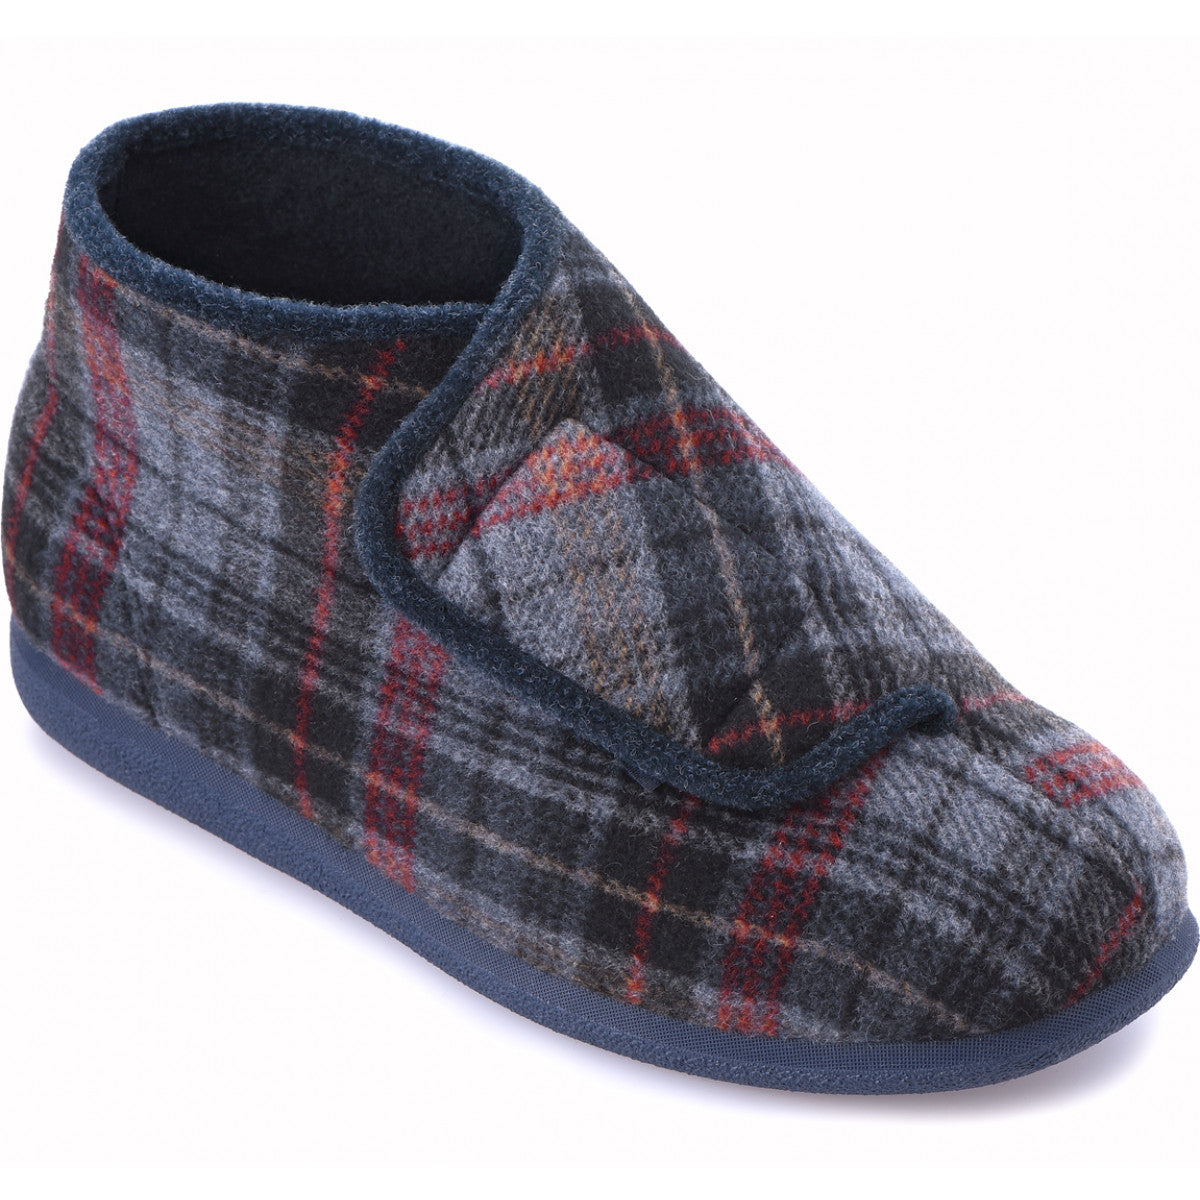  Soft, adjustable bootee slipper 